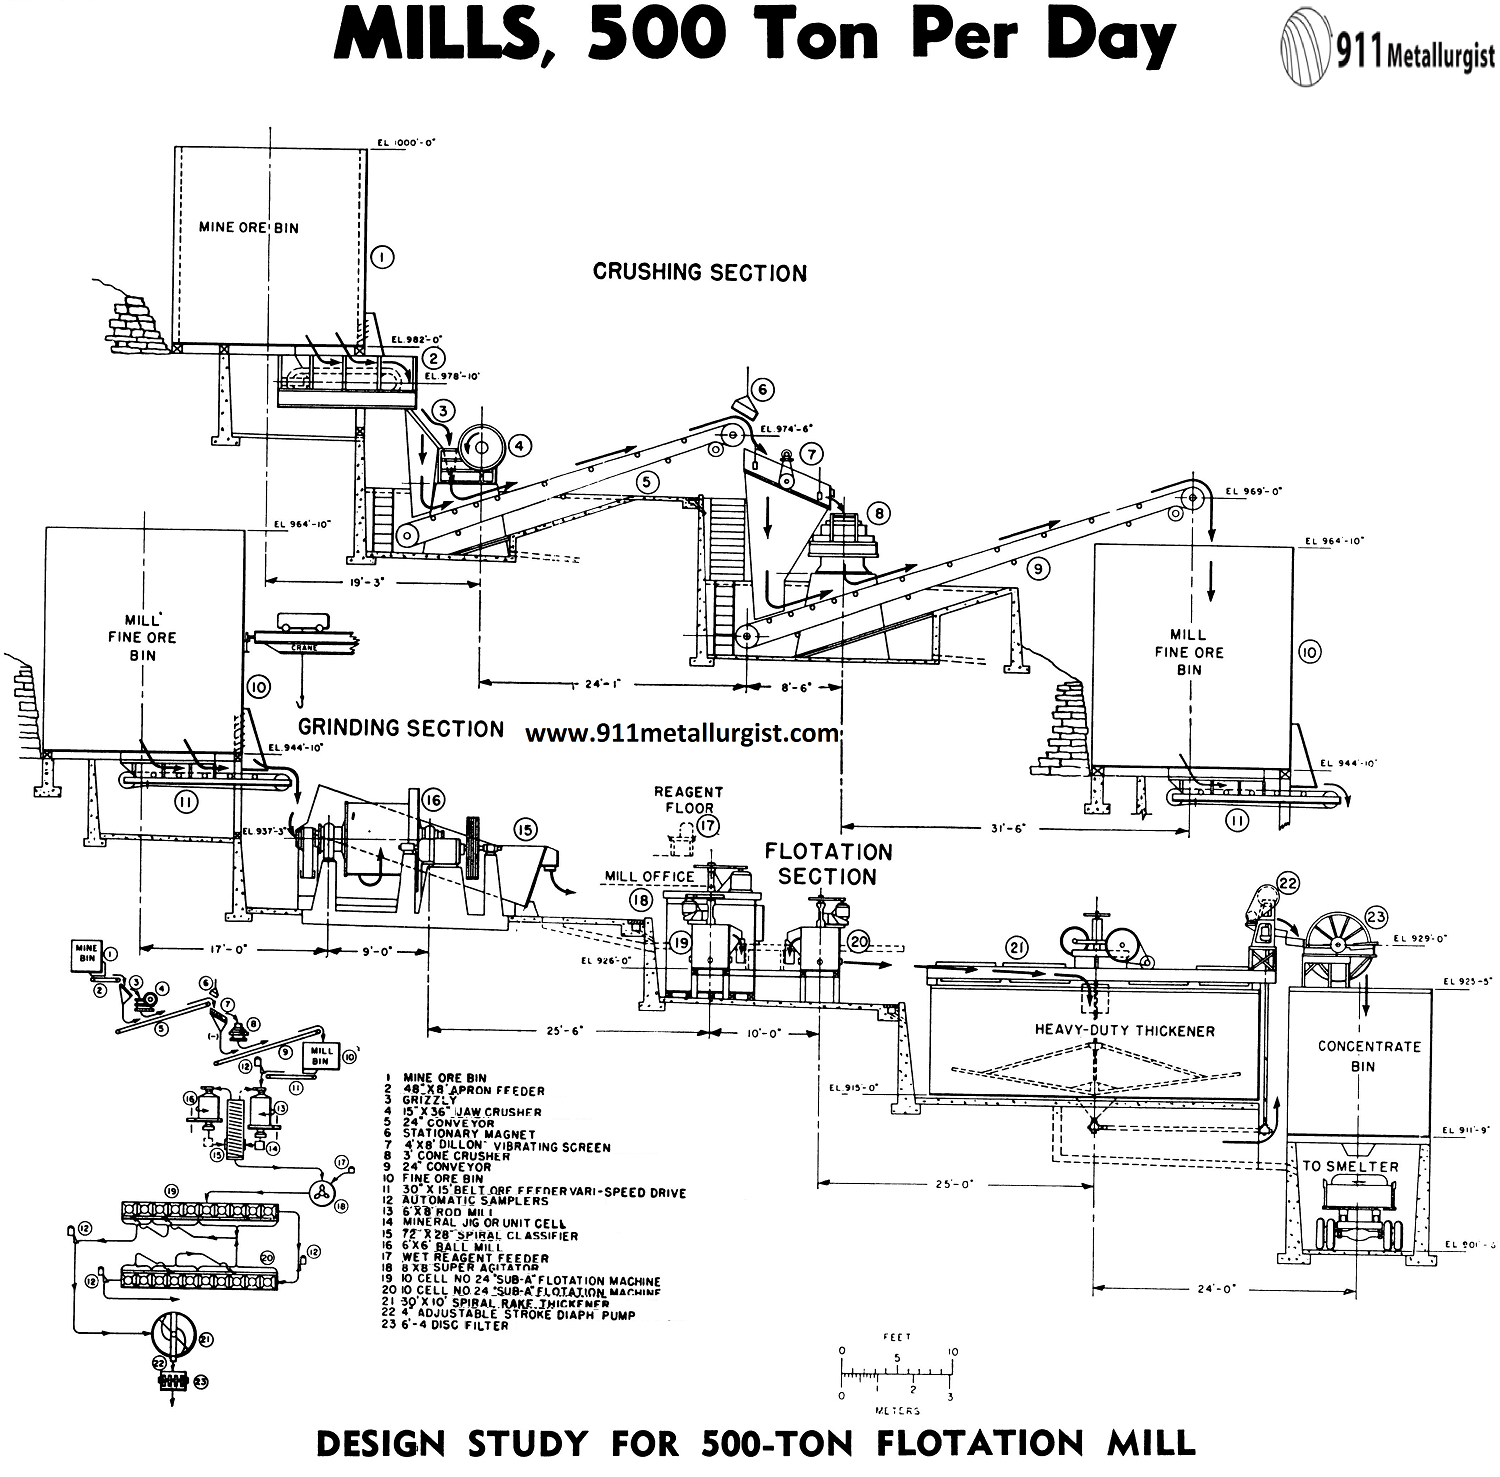 Design Study for 500-Ton Flotation Mill